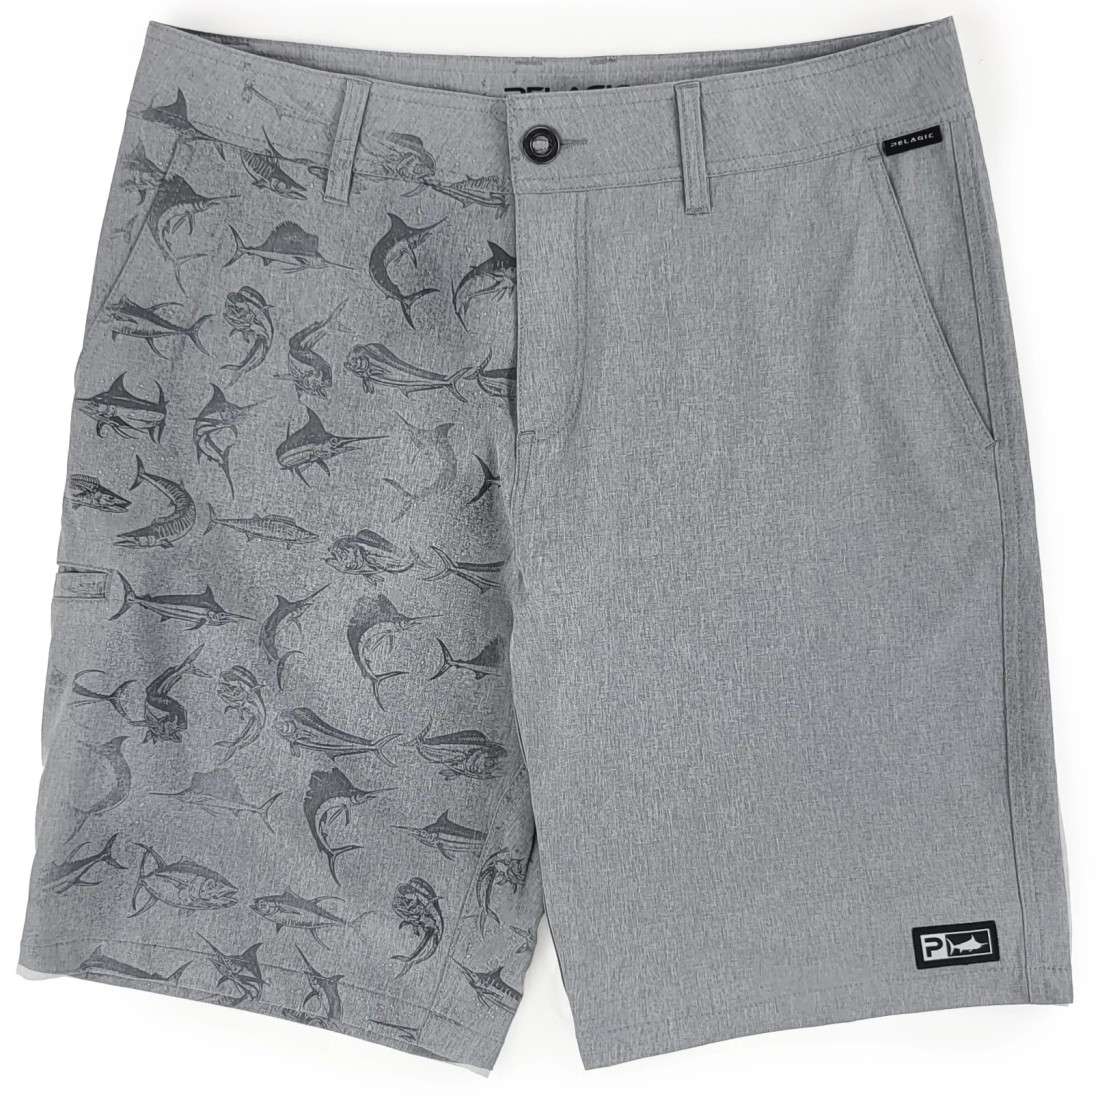 Pelagic Traverse Gyotaku Hybrid Shorts - Grey - 36